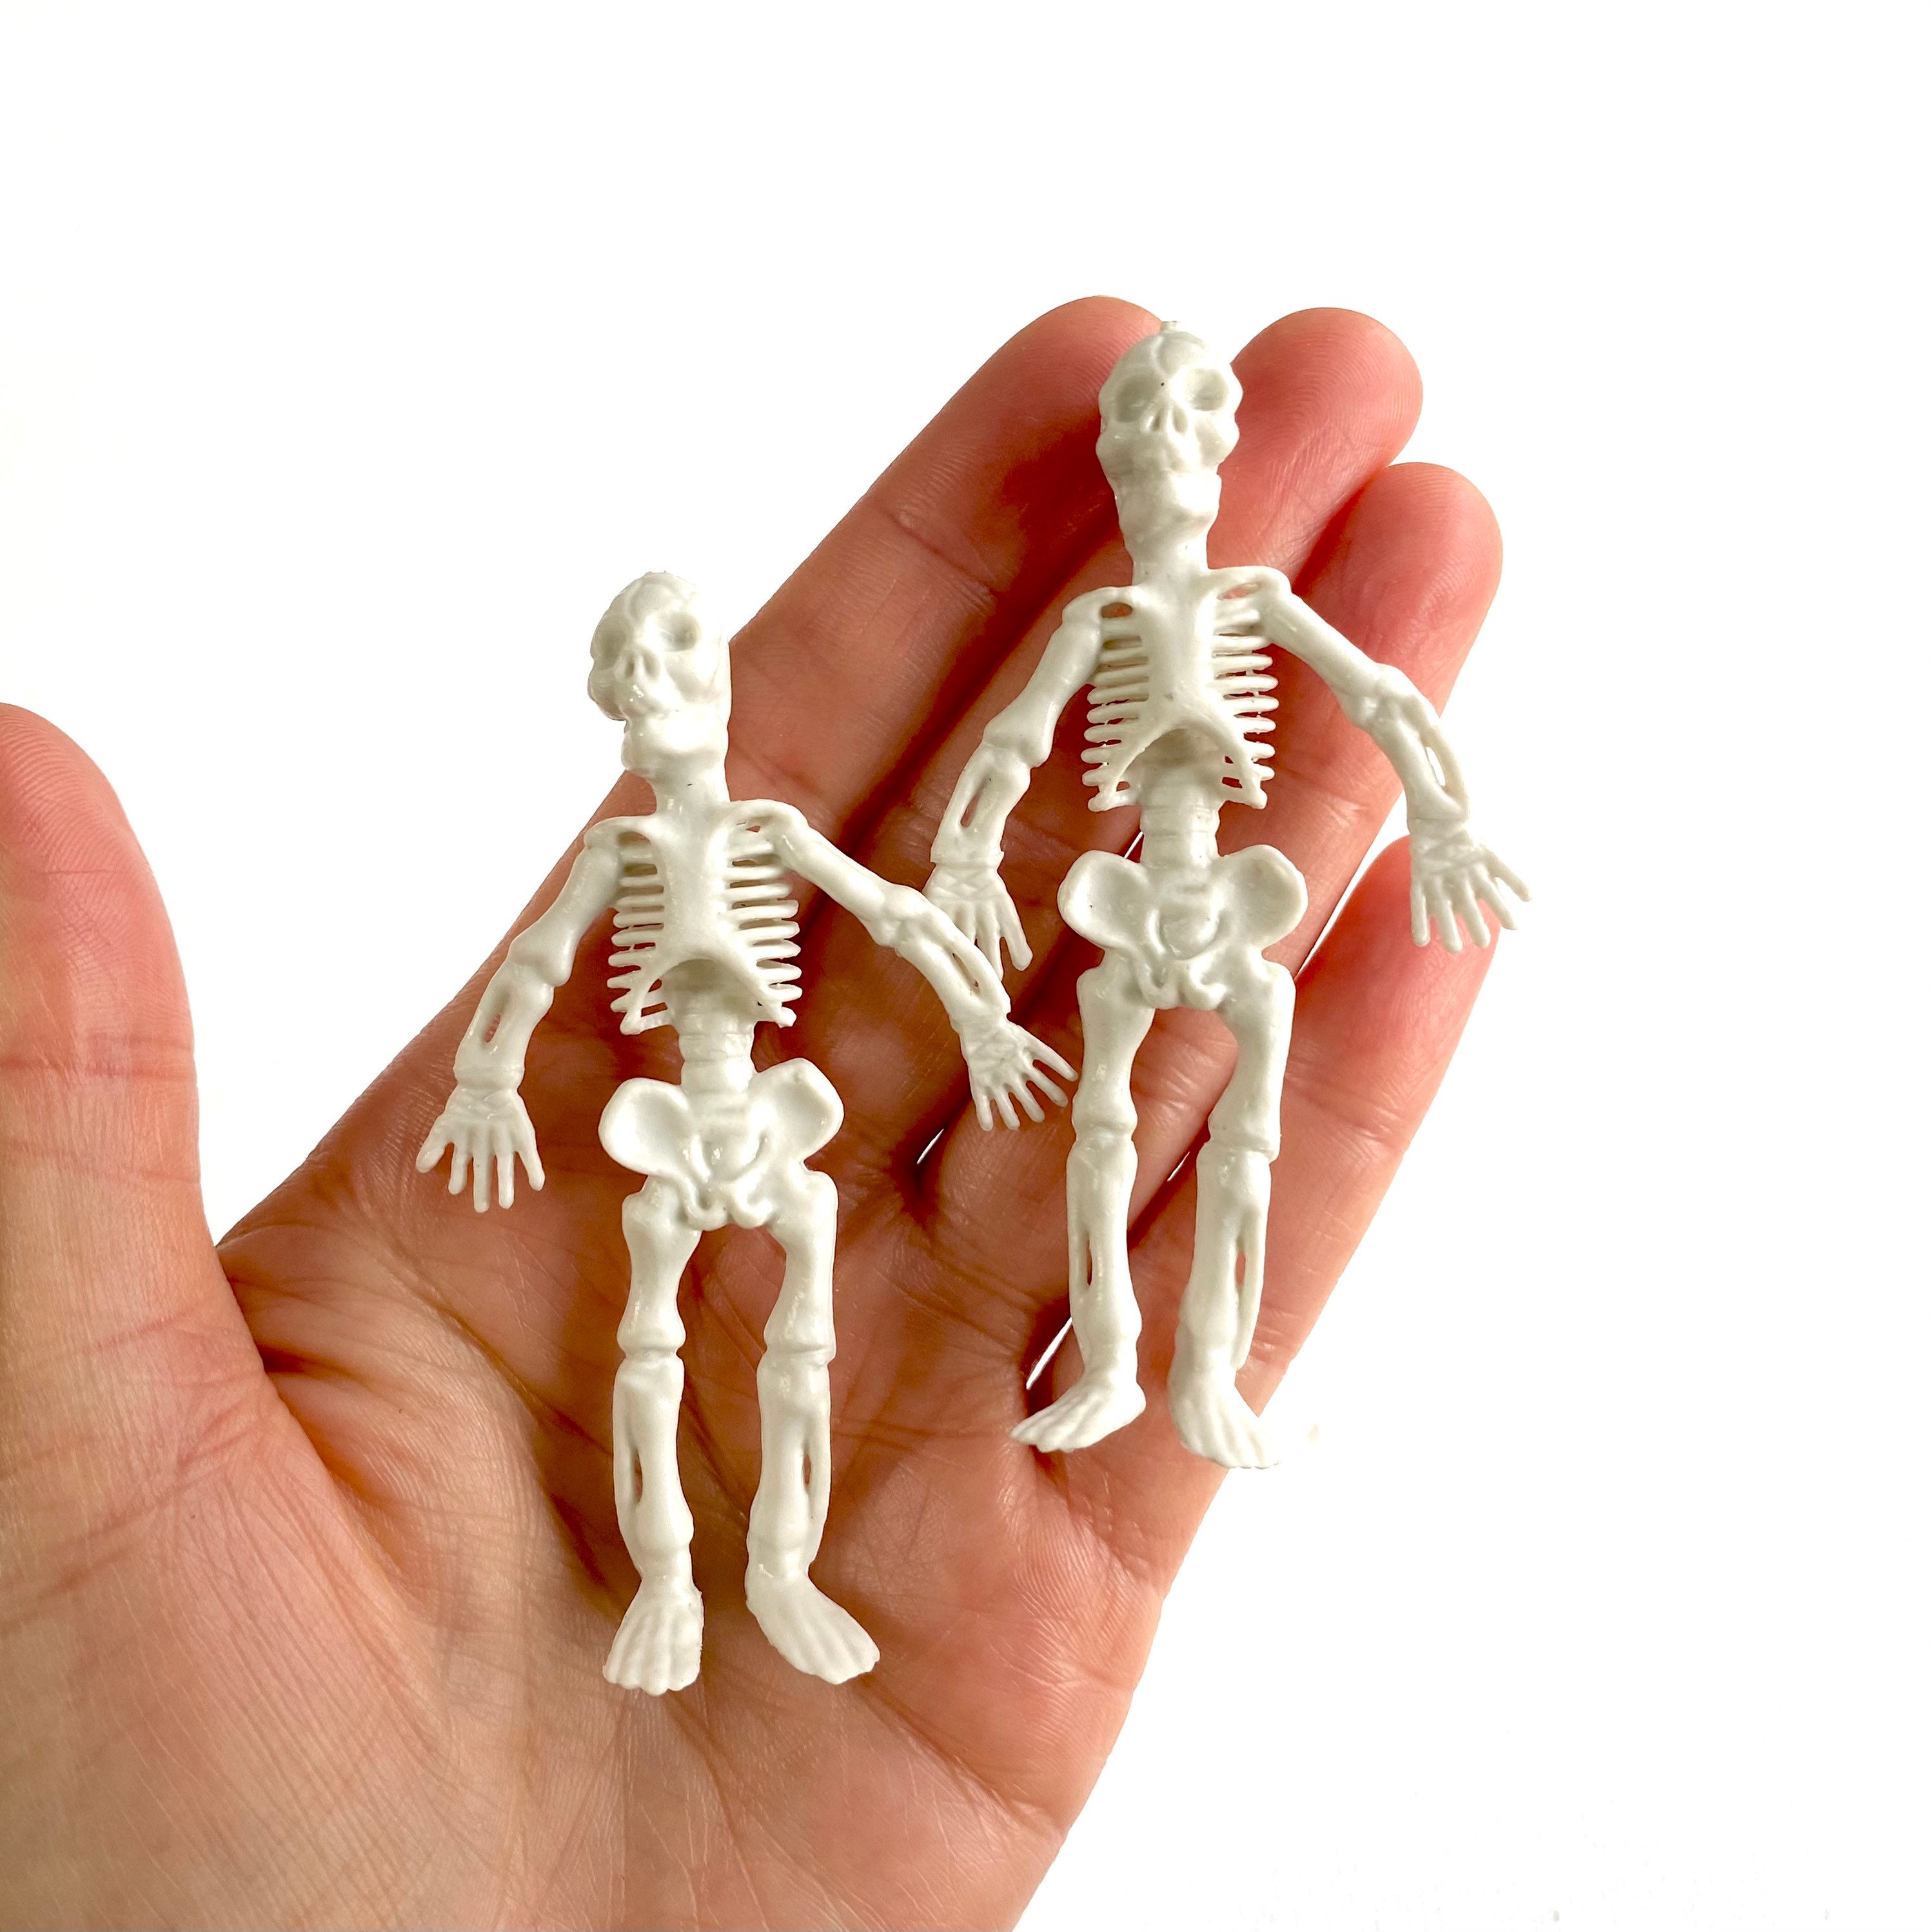 Miniatur Skeleton Figur Kunststoff Halloween Dekoration 7cm x 4cm Dollhouse  Miniatures UK Verkäufer - .de